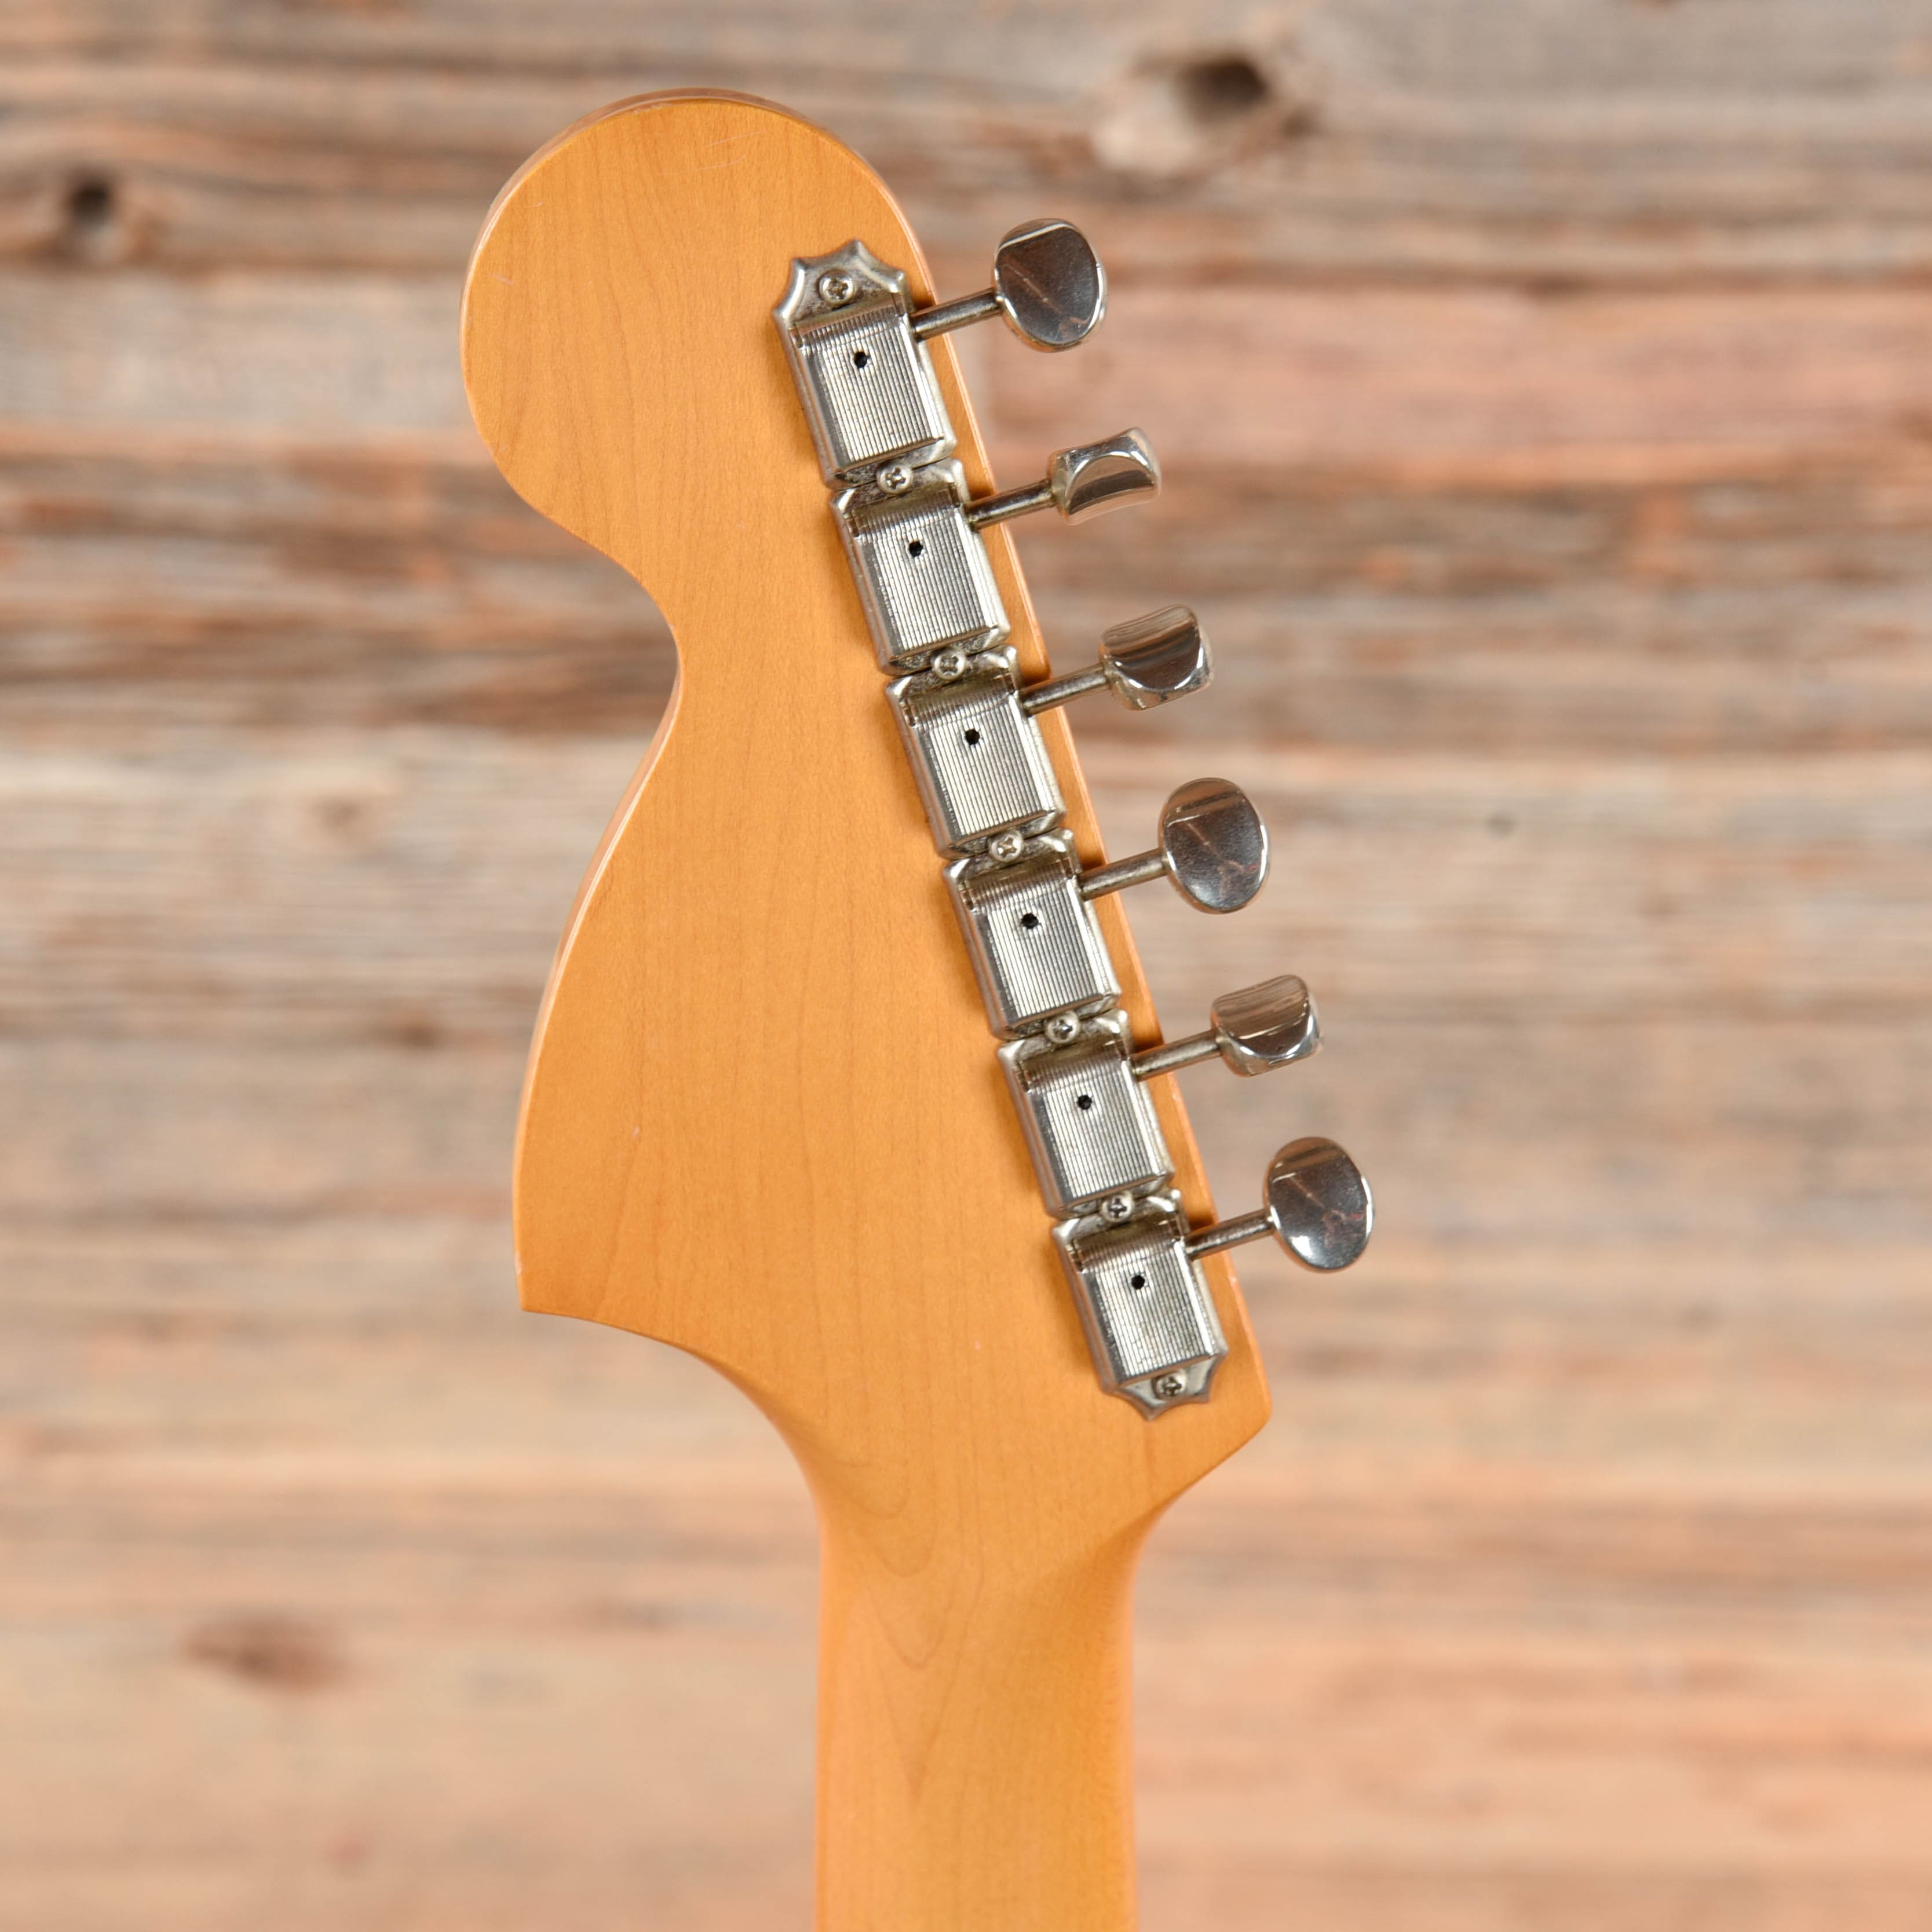 Fender Stratocaster Japan Atnique White Electric Guitars / Solid Body